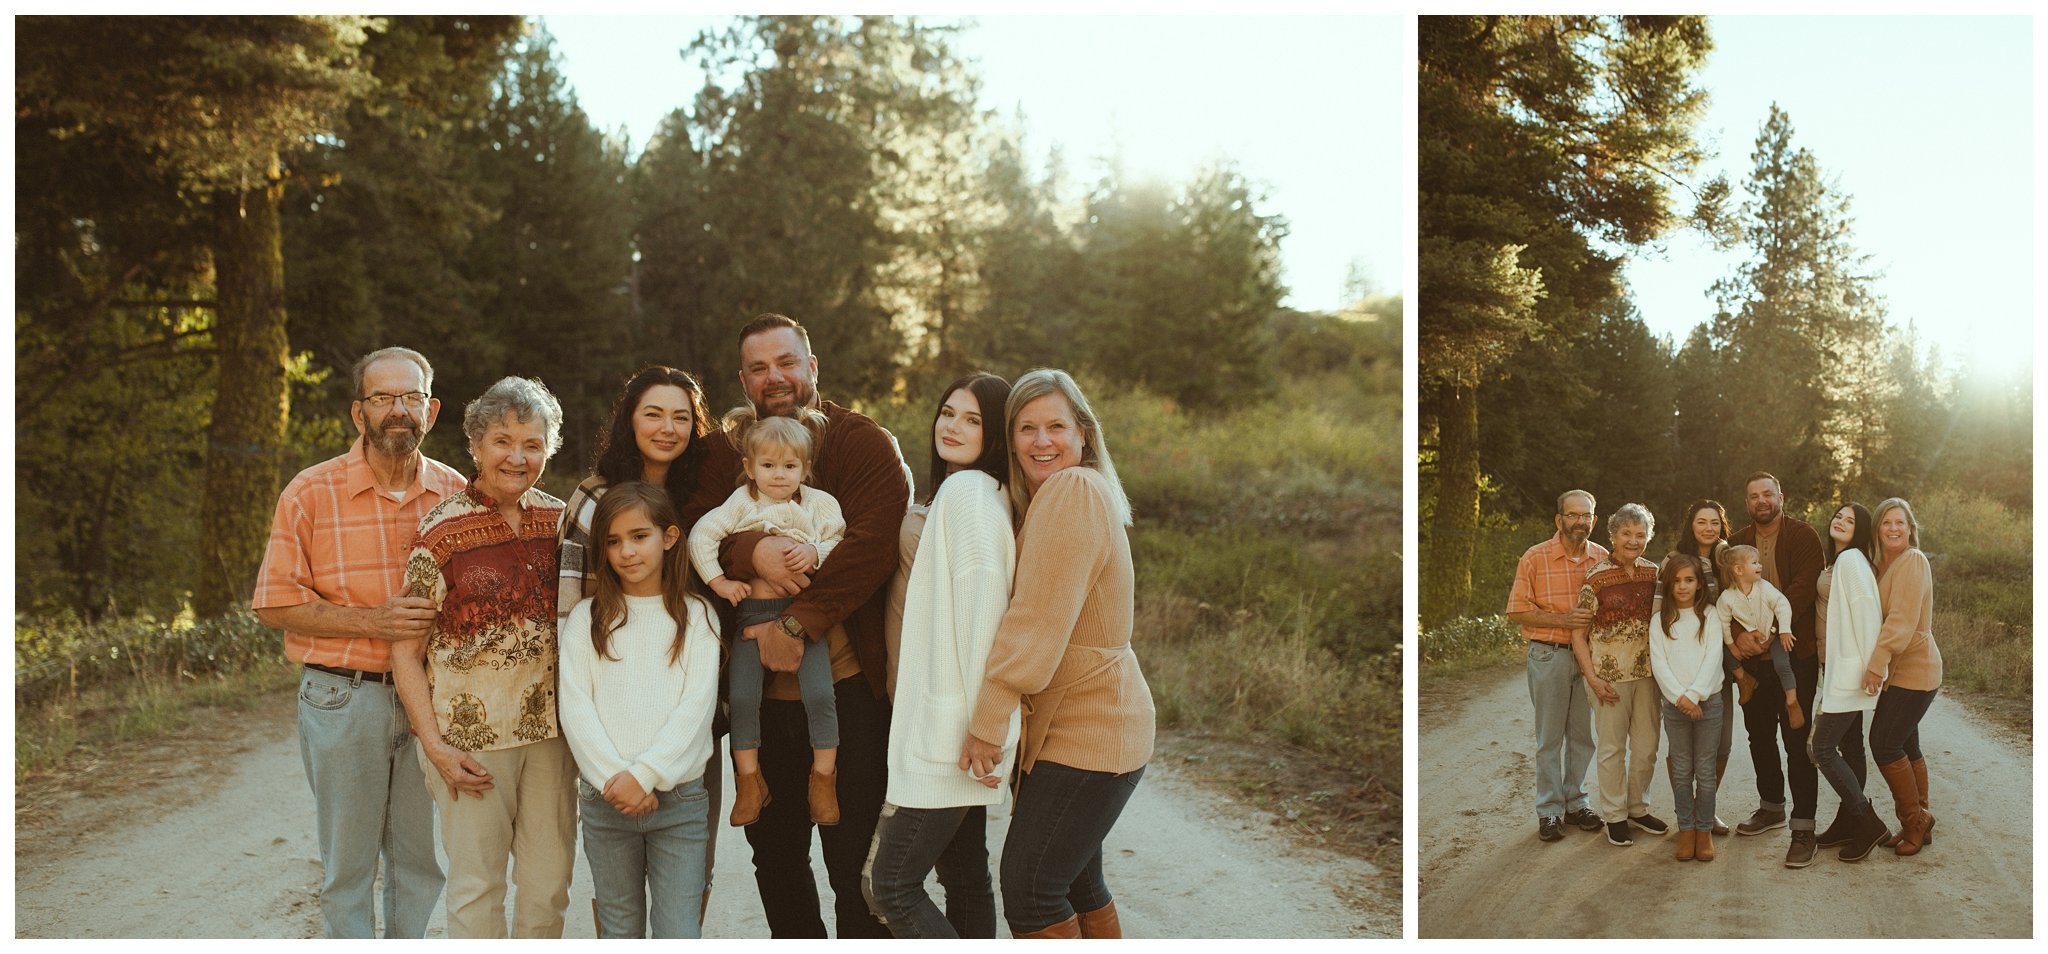 Carstensen Family Session in Boise National Forest by Treasure Valley Family Photographer, Kamra Fuller Photography 